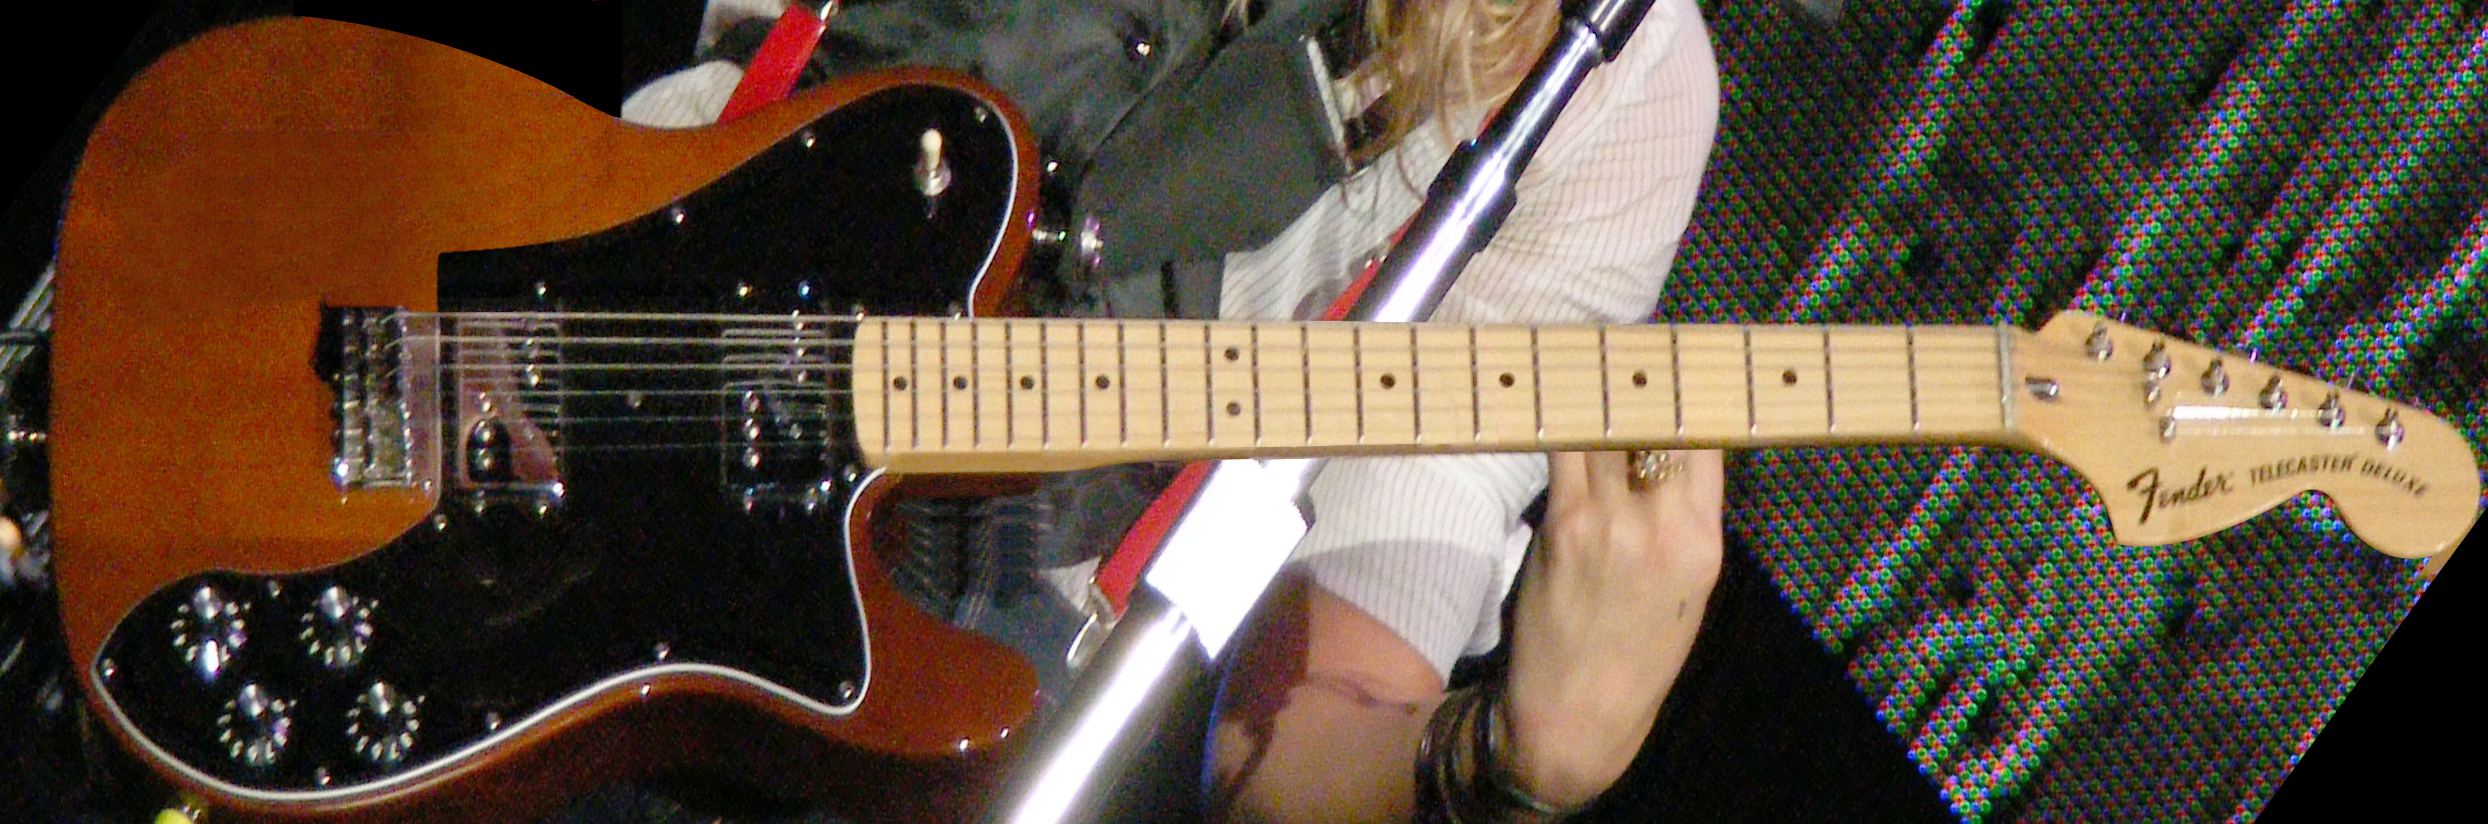 Fender Telecaster Deluxe - Wikipedia